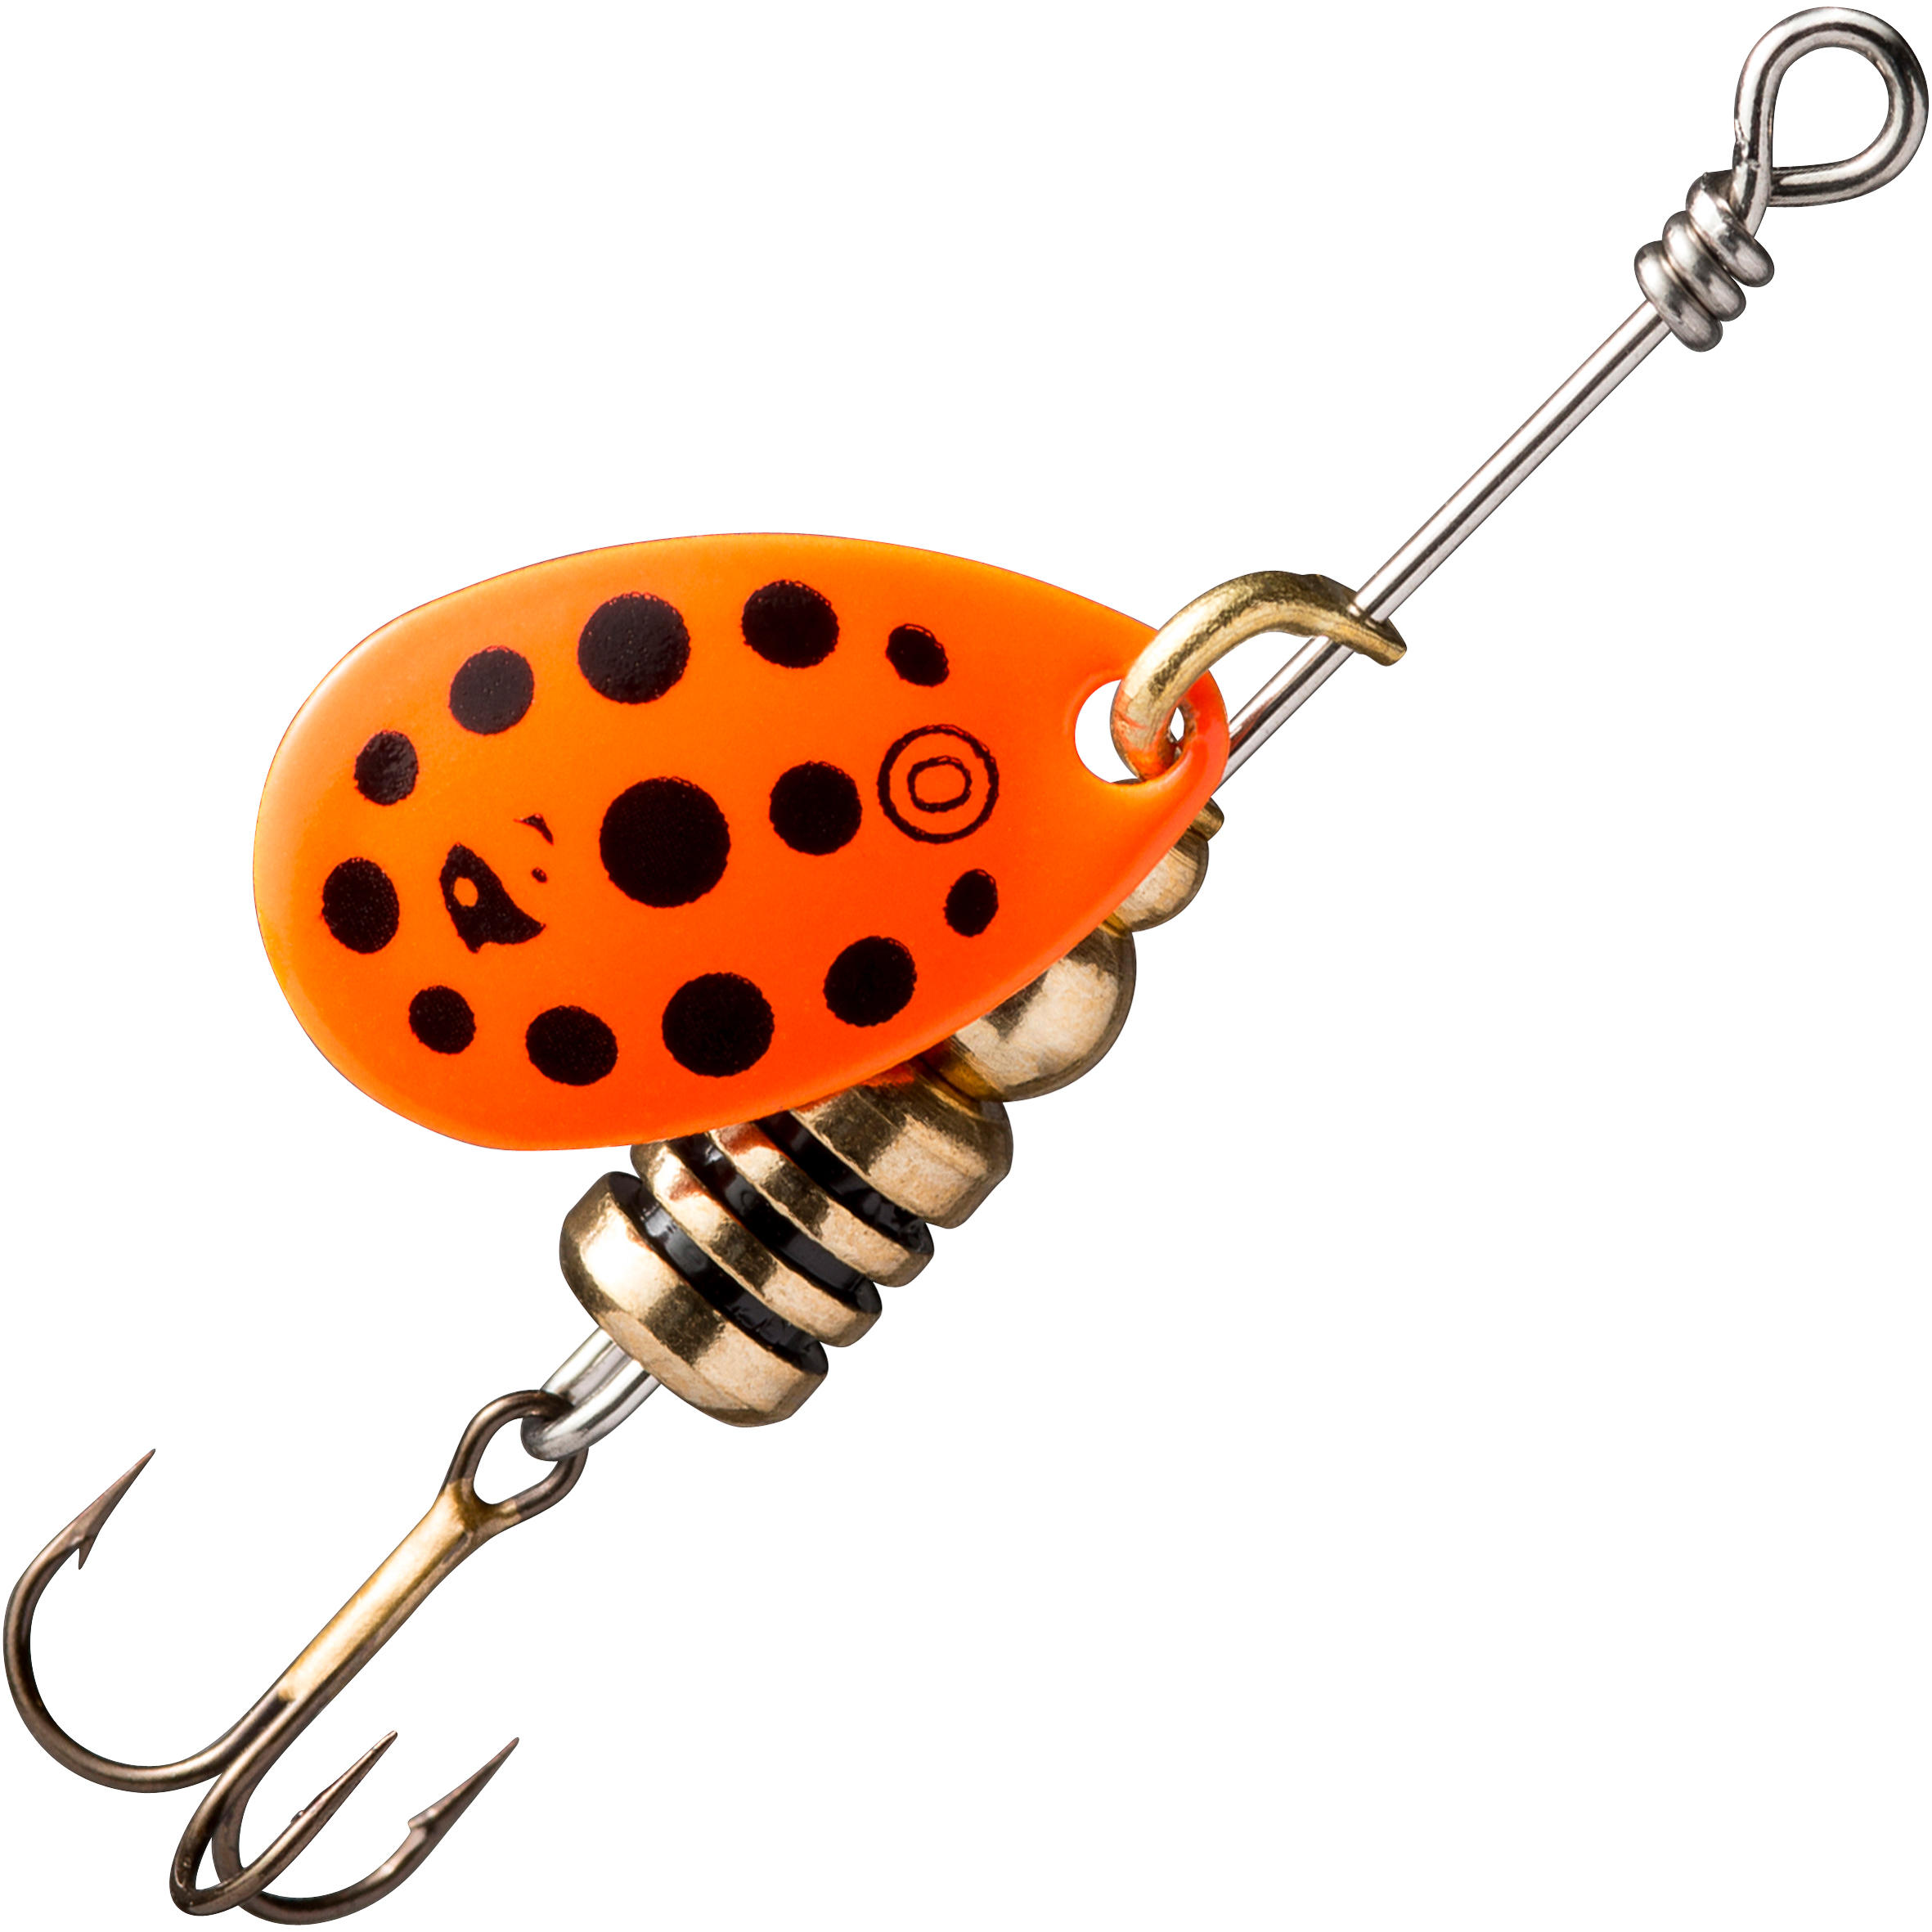 Decathlon | Cucchiaino rotante pesca spinning WETA #0 arancione a pois neri |  Caperlan